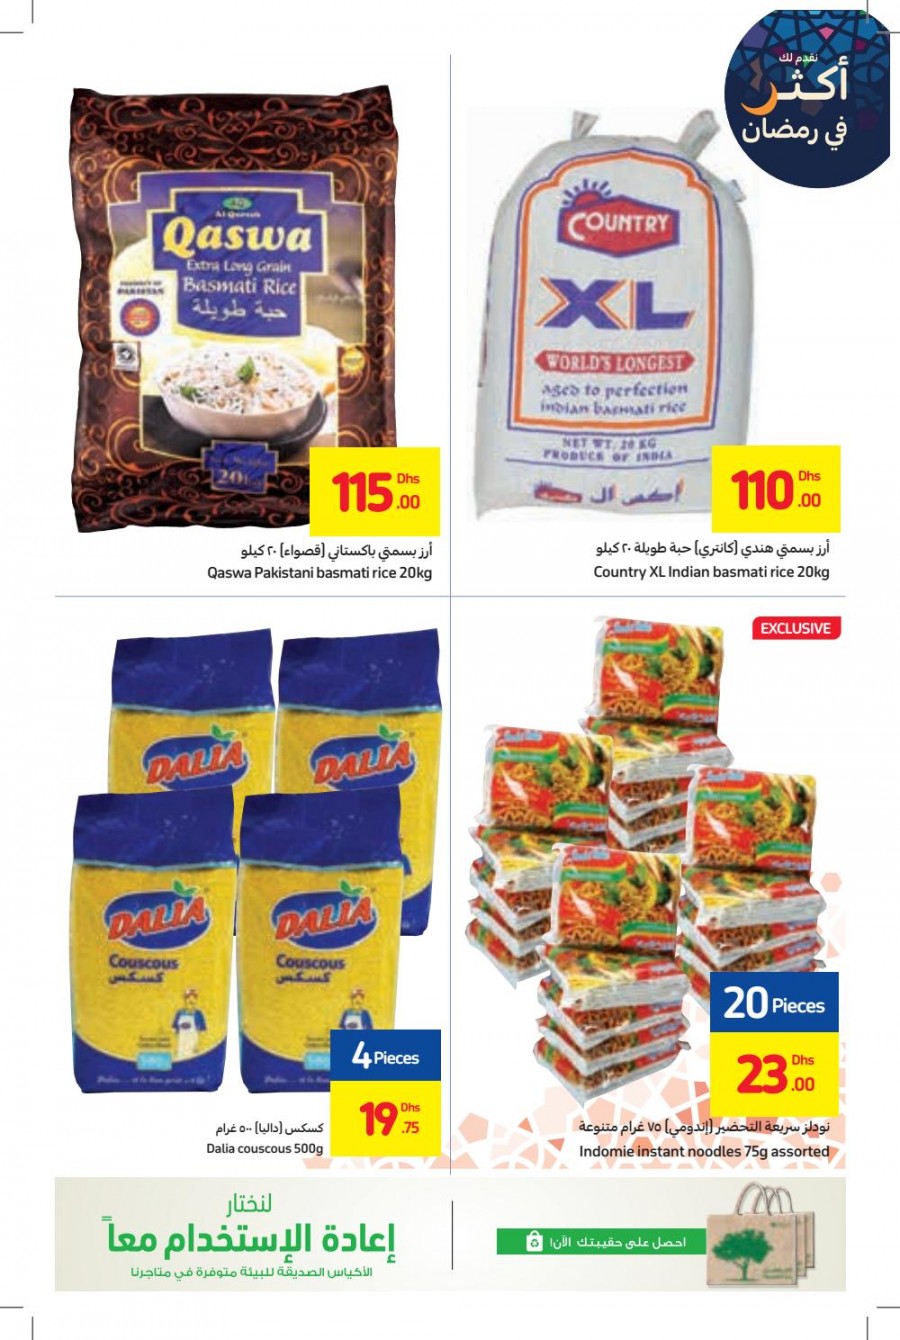 Carrefour Hypermarket Ramadan Mubarak Offers